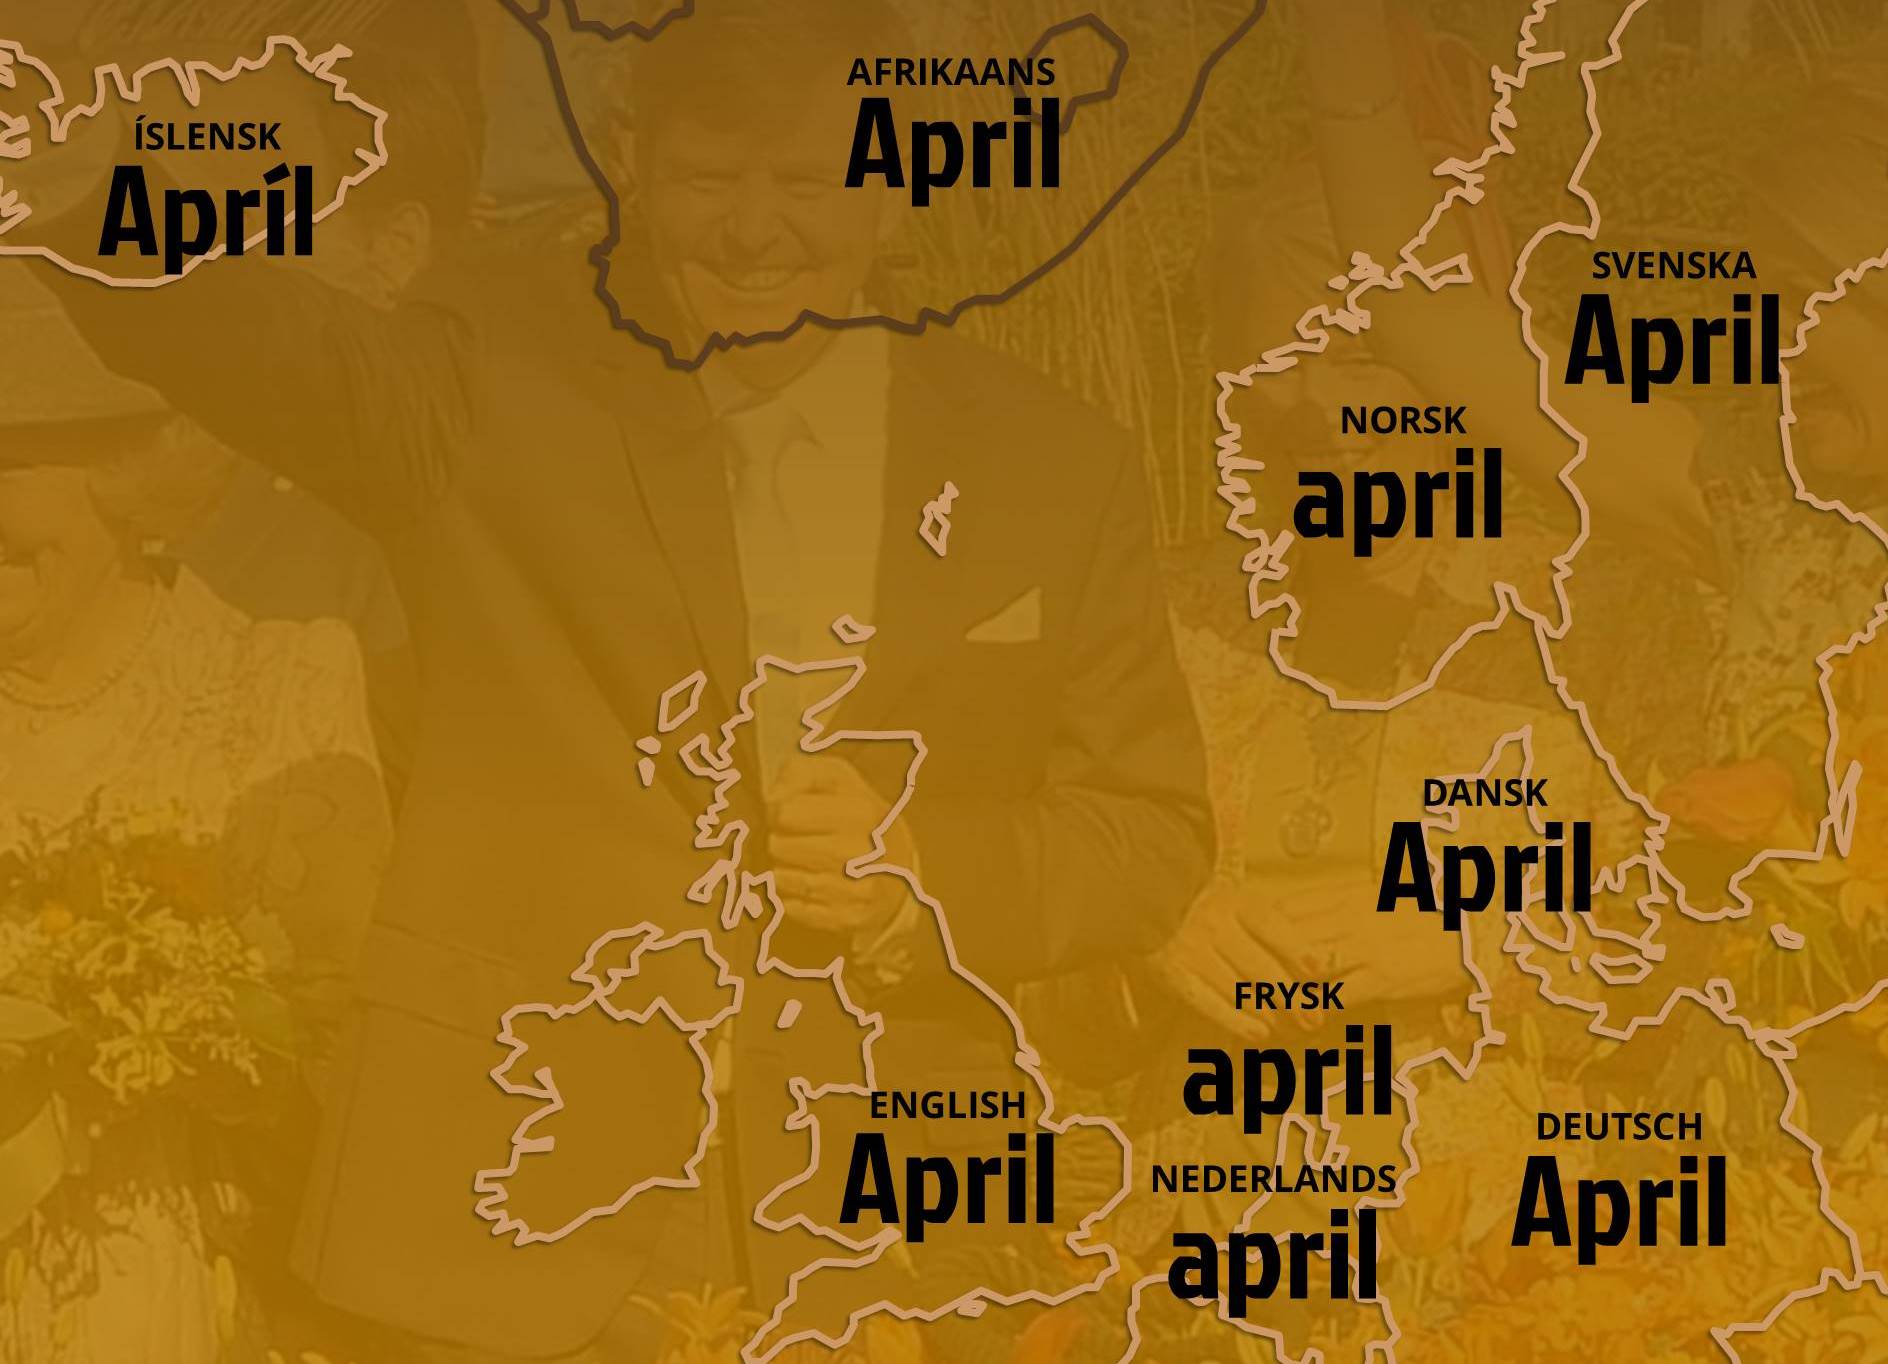 'April' in nine languages.